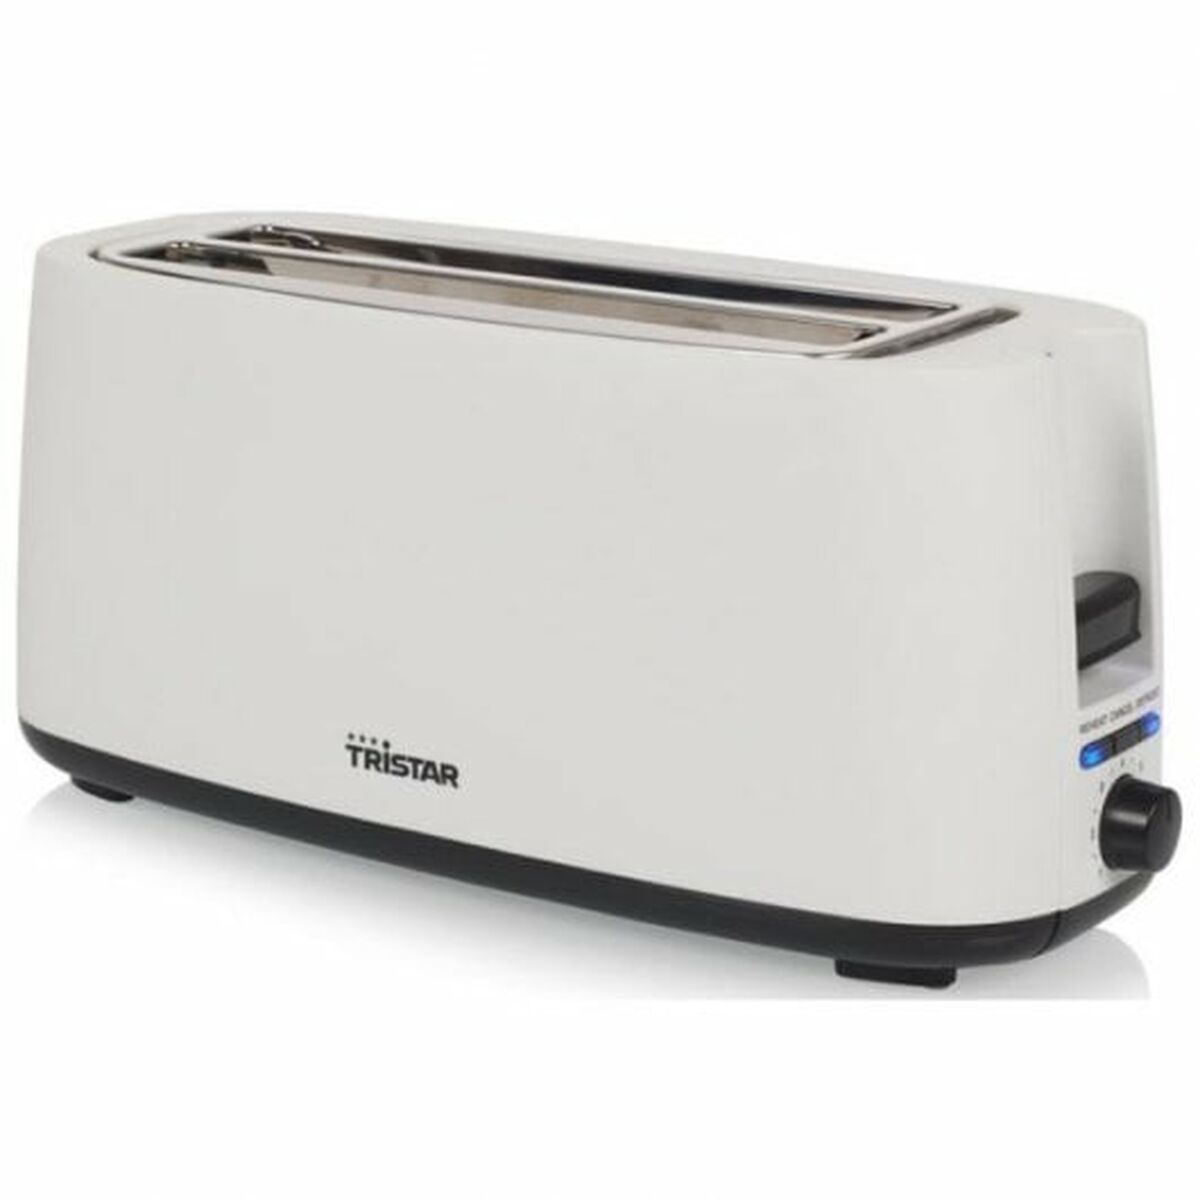 Toaster Tristar 1400 W - CA International 